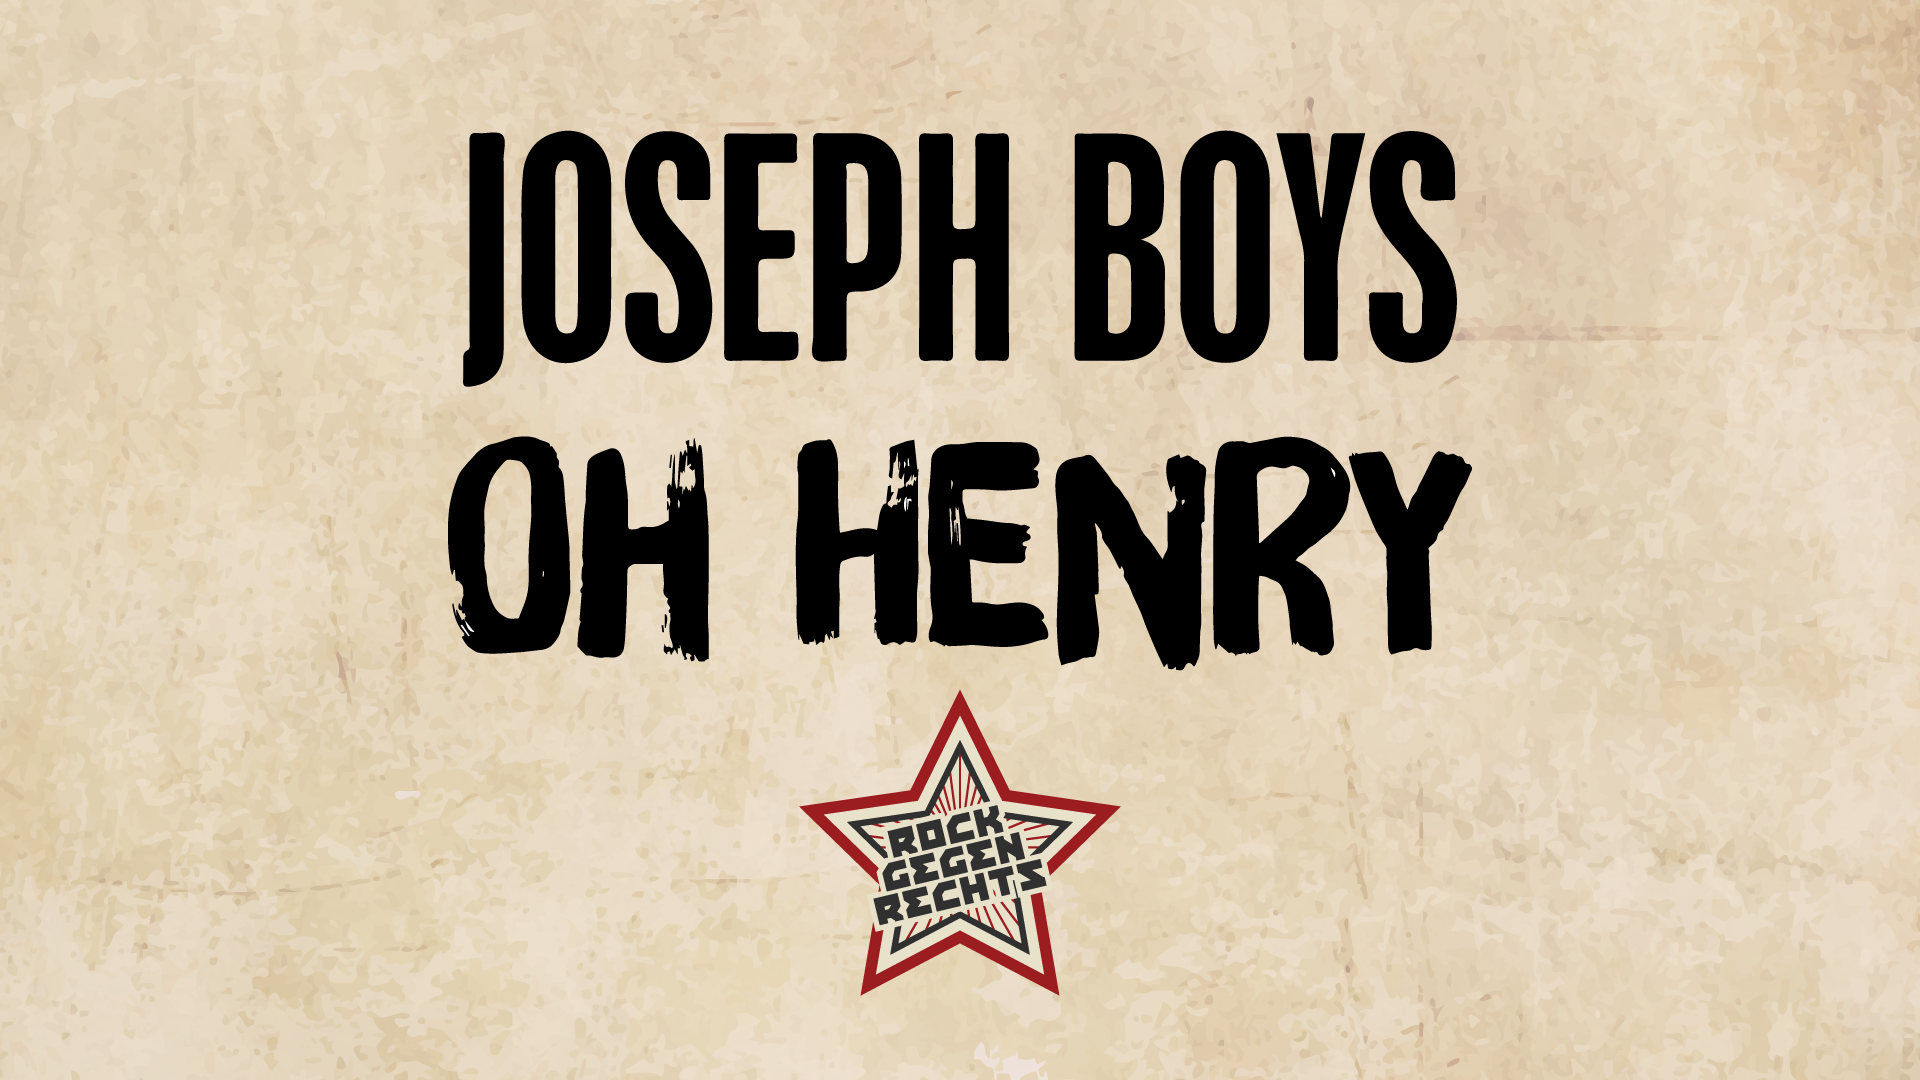 Joseph Boys & Oh Henry – Streamingkonzert am 19.6.